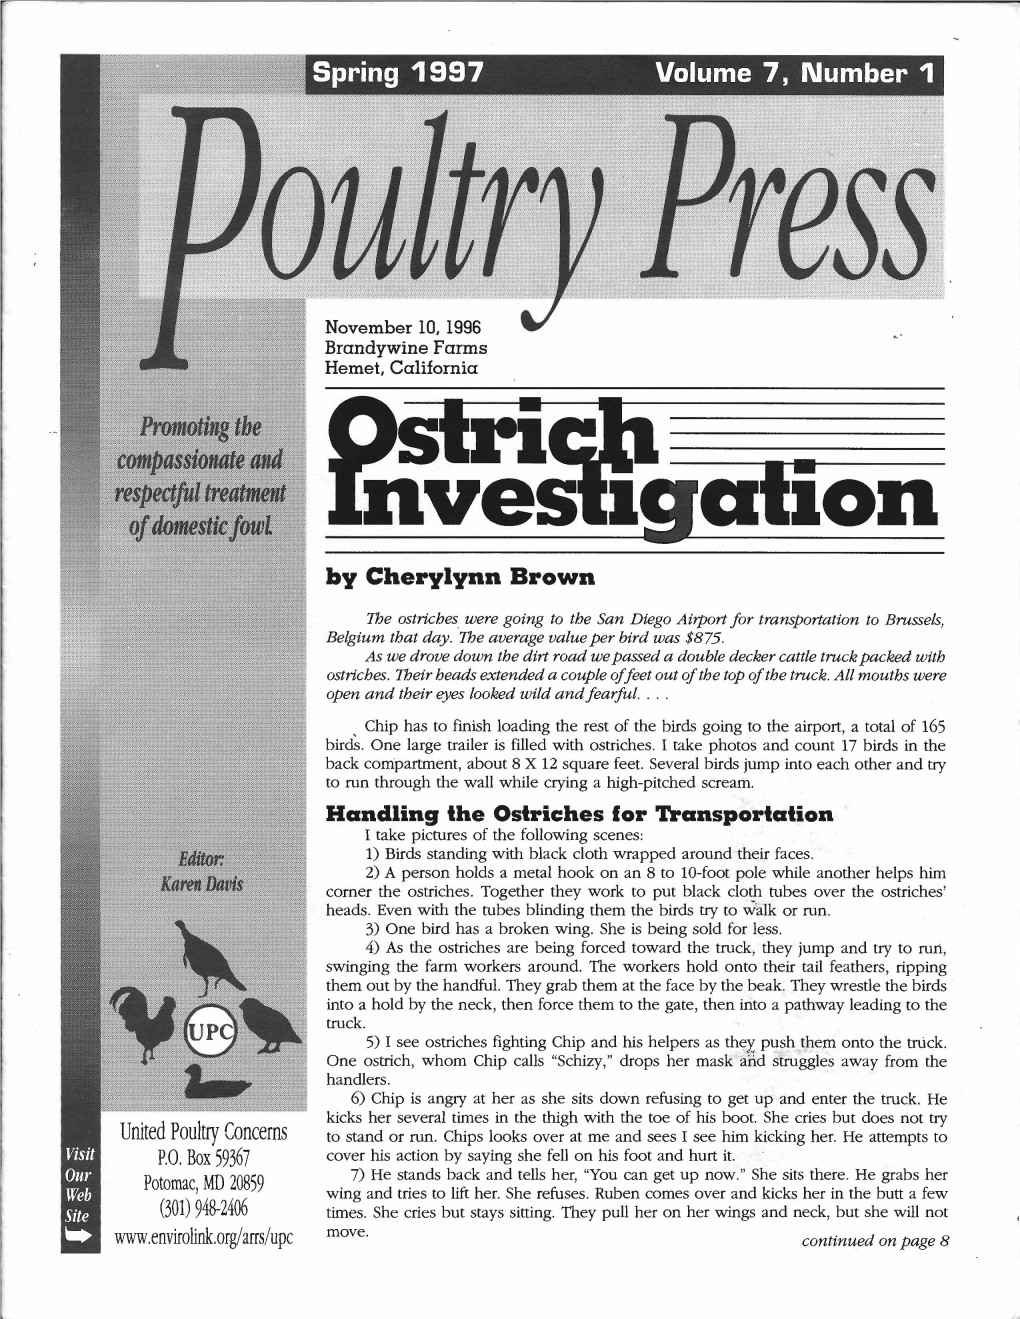 UPC Spring 1997 Poultry Press